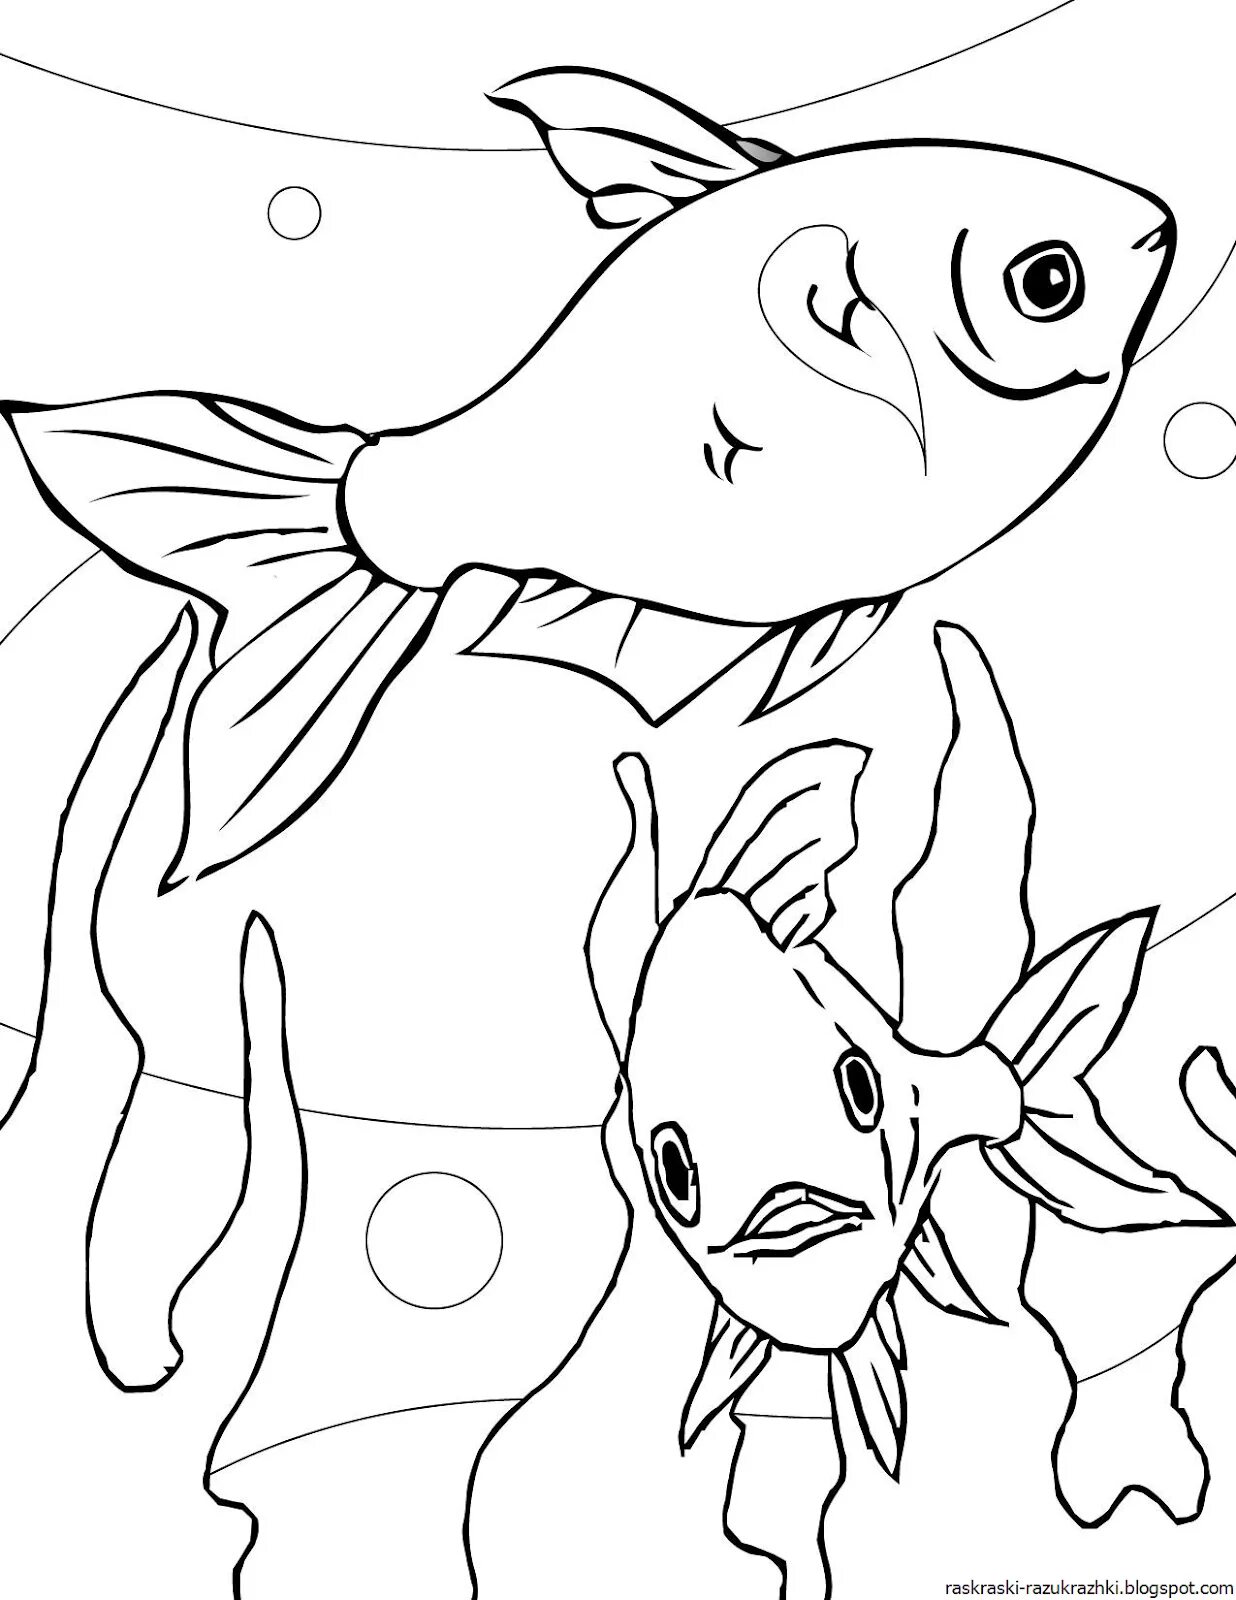 Раскраска рыбы для детей 6 лет. Раскраска рыбка. Аквариумные рыбки раскраска. Аквариумные рыбки раскраска для детей. Аквариумные рыбы раскраска.